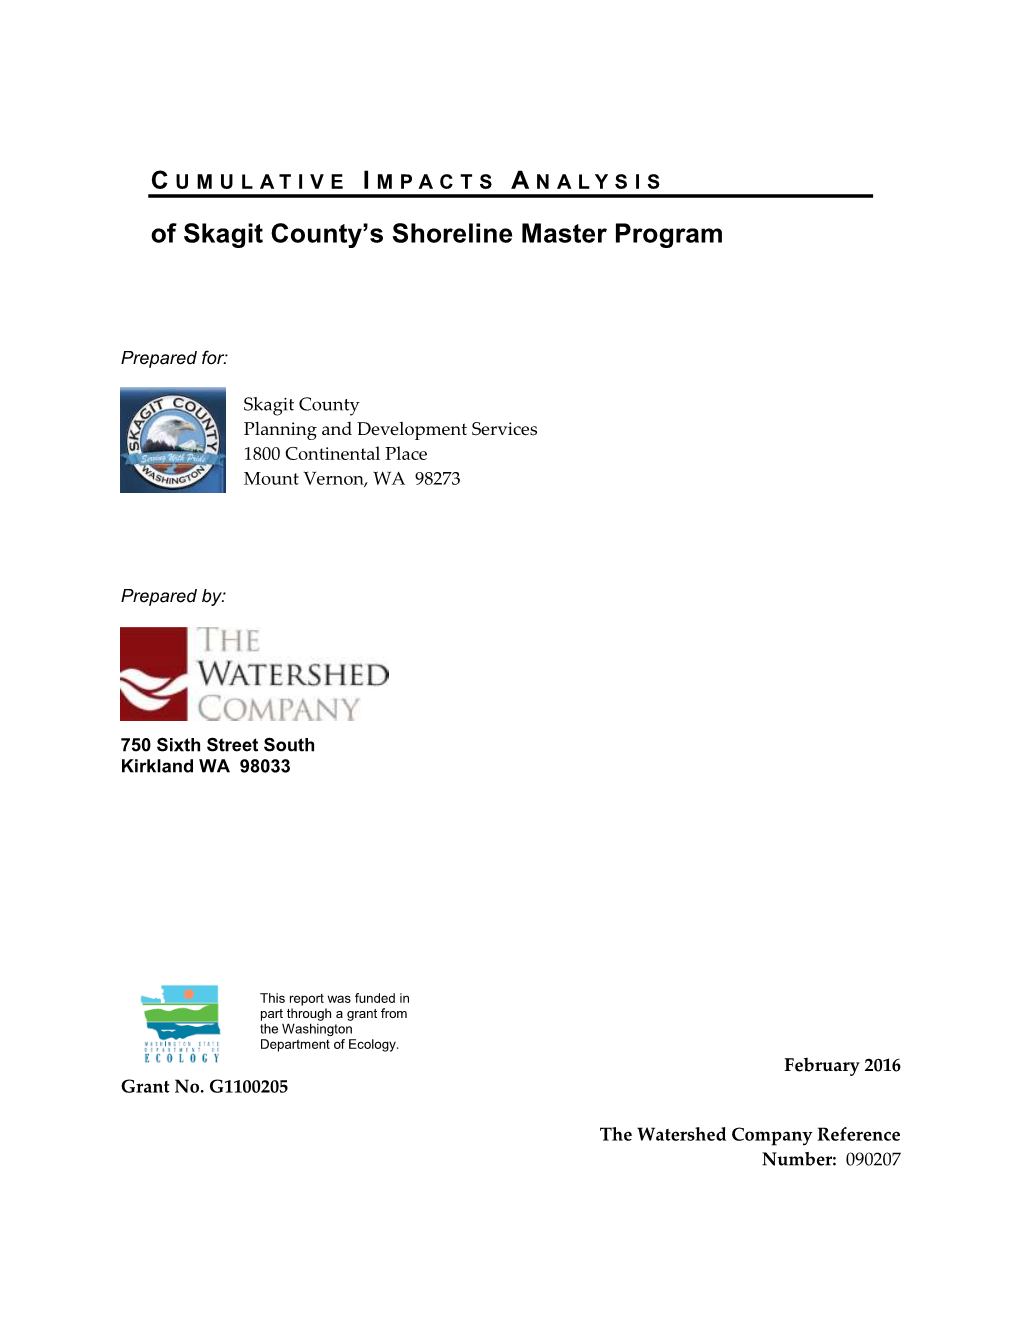 Cumulative Impacts Analysis Report